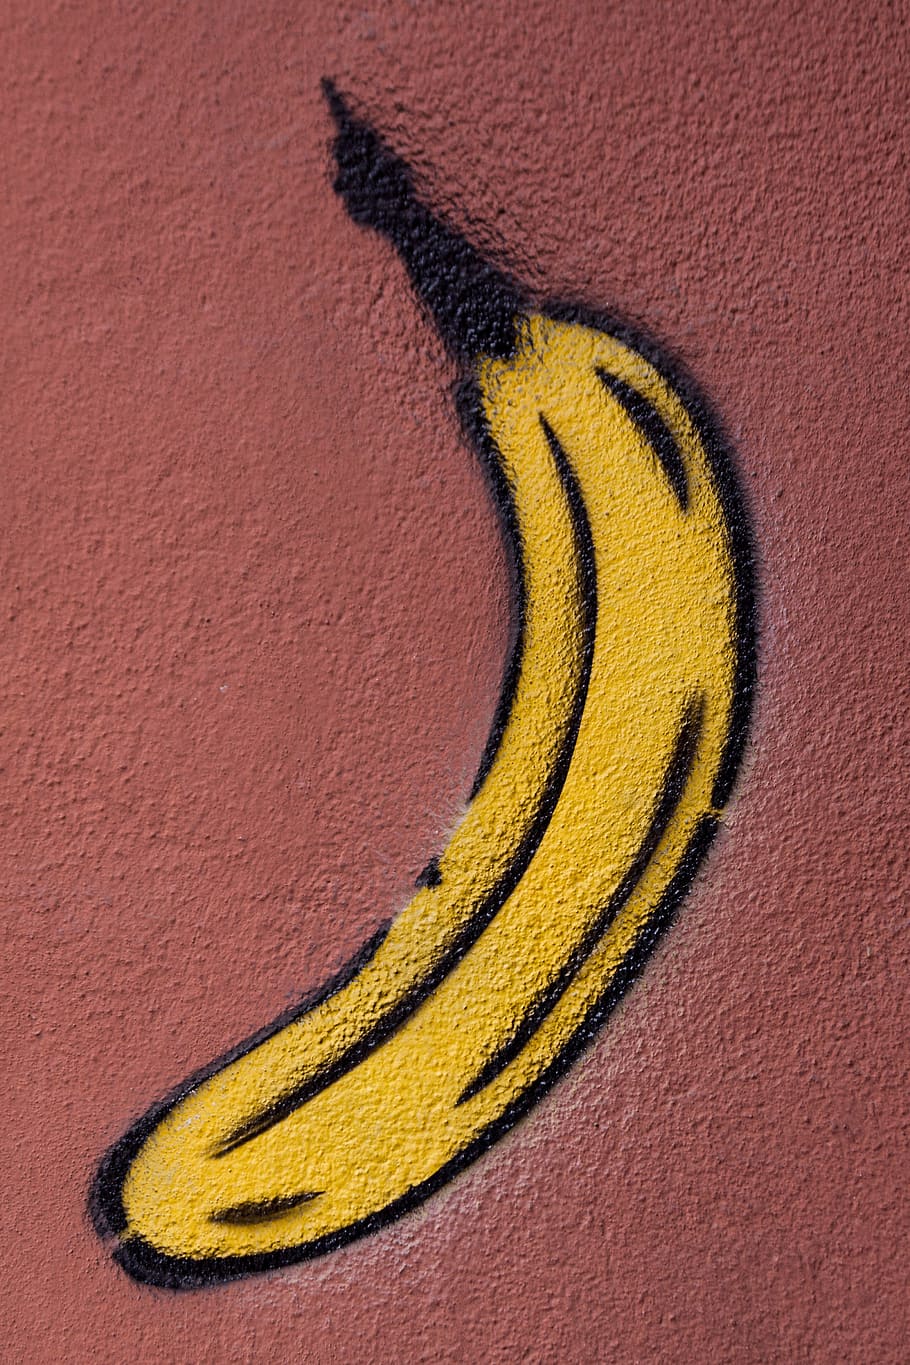 graffiti, banana, art, wall, grunge, city, home, masonry, facade, youth